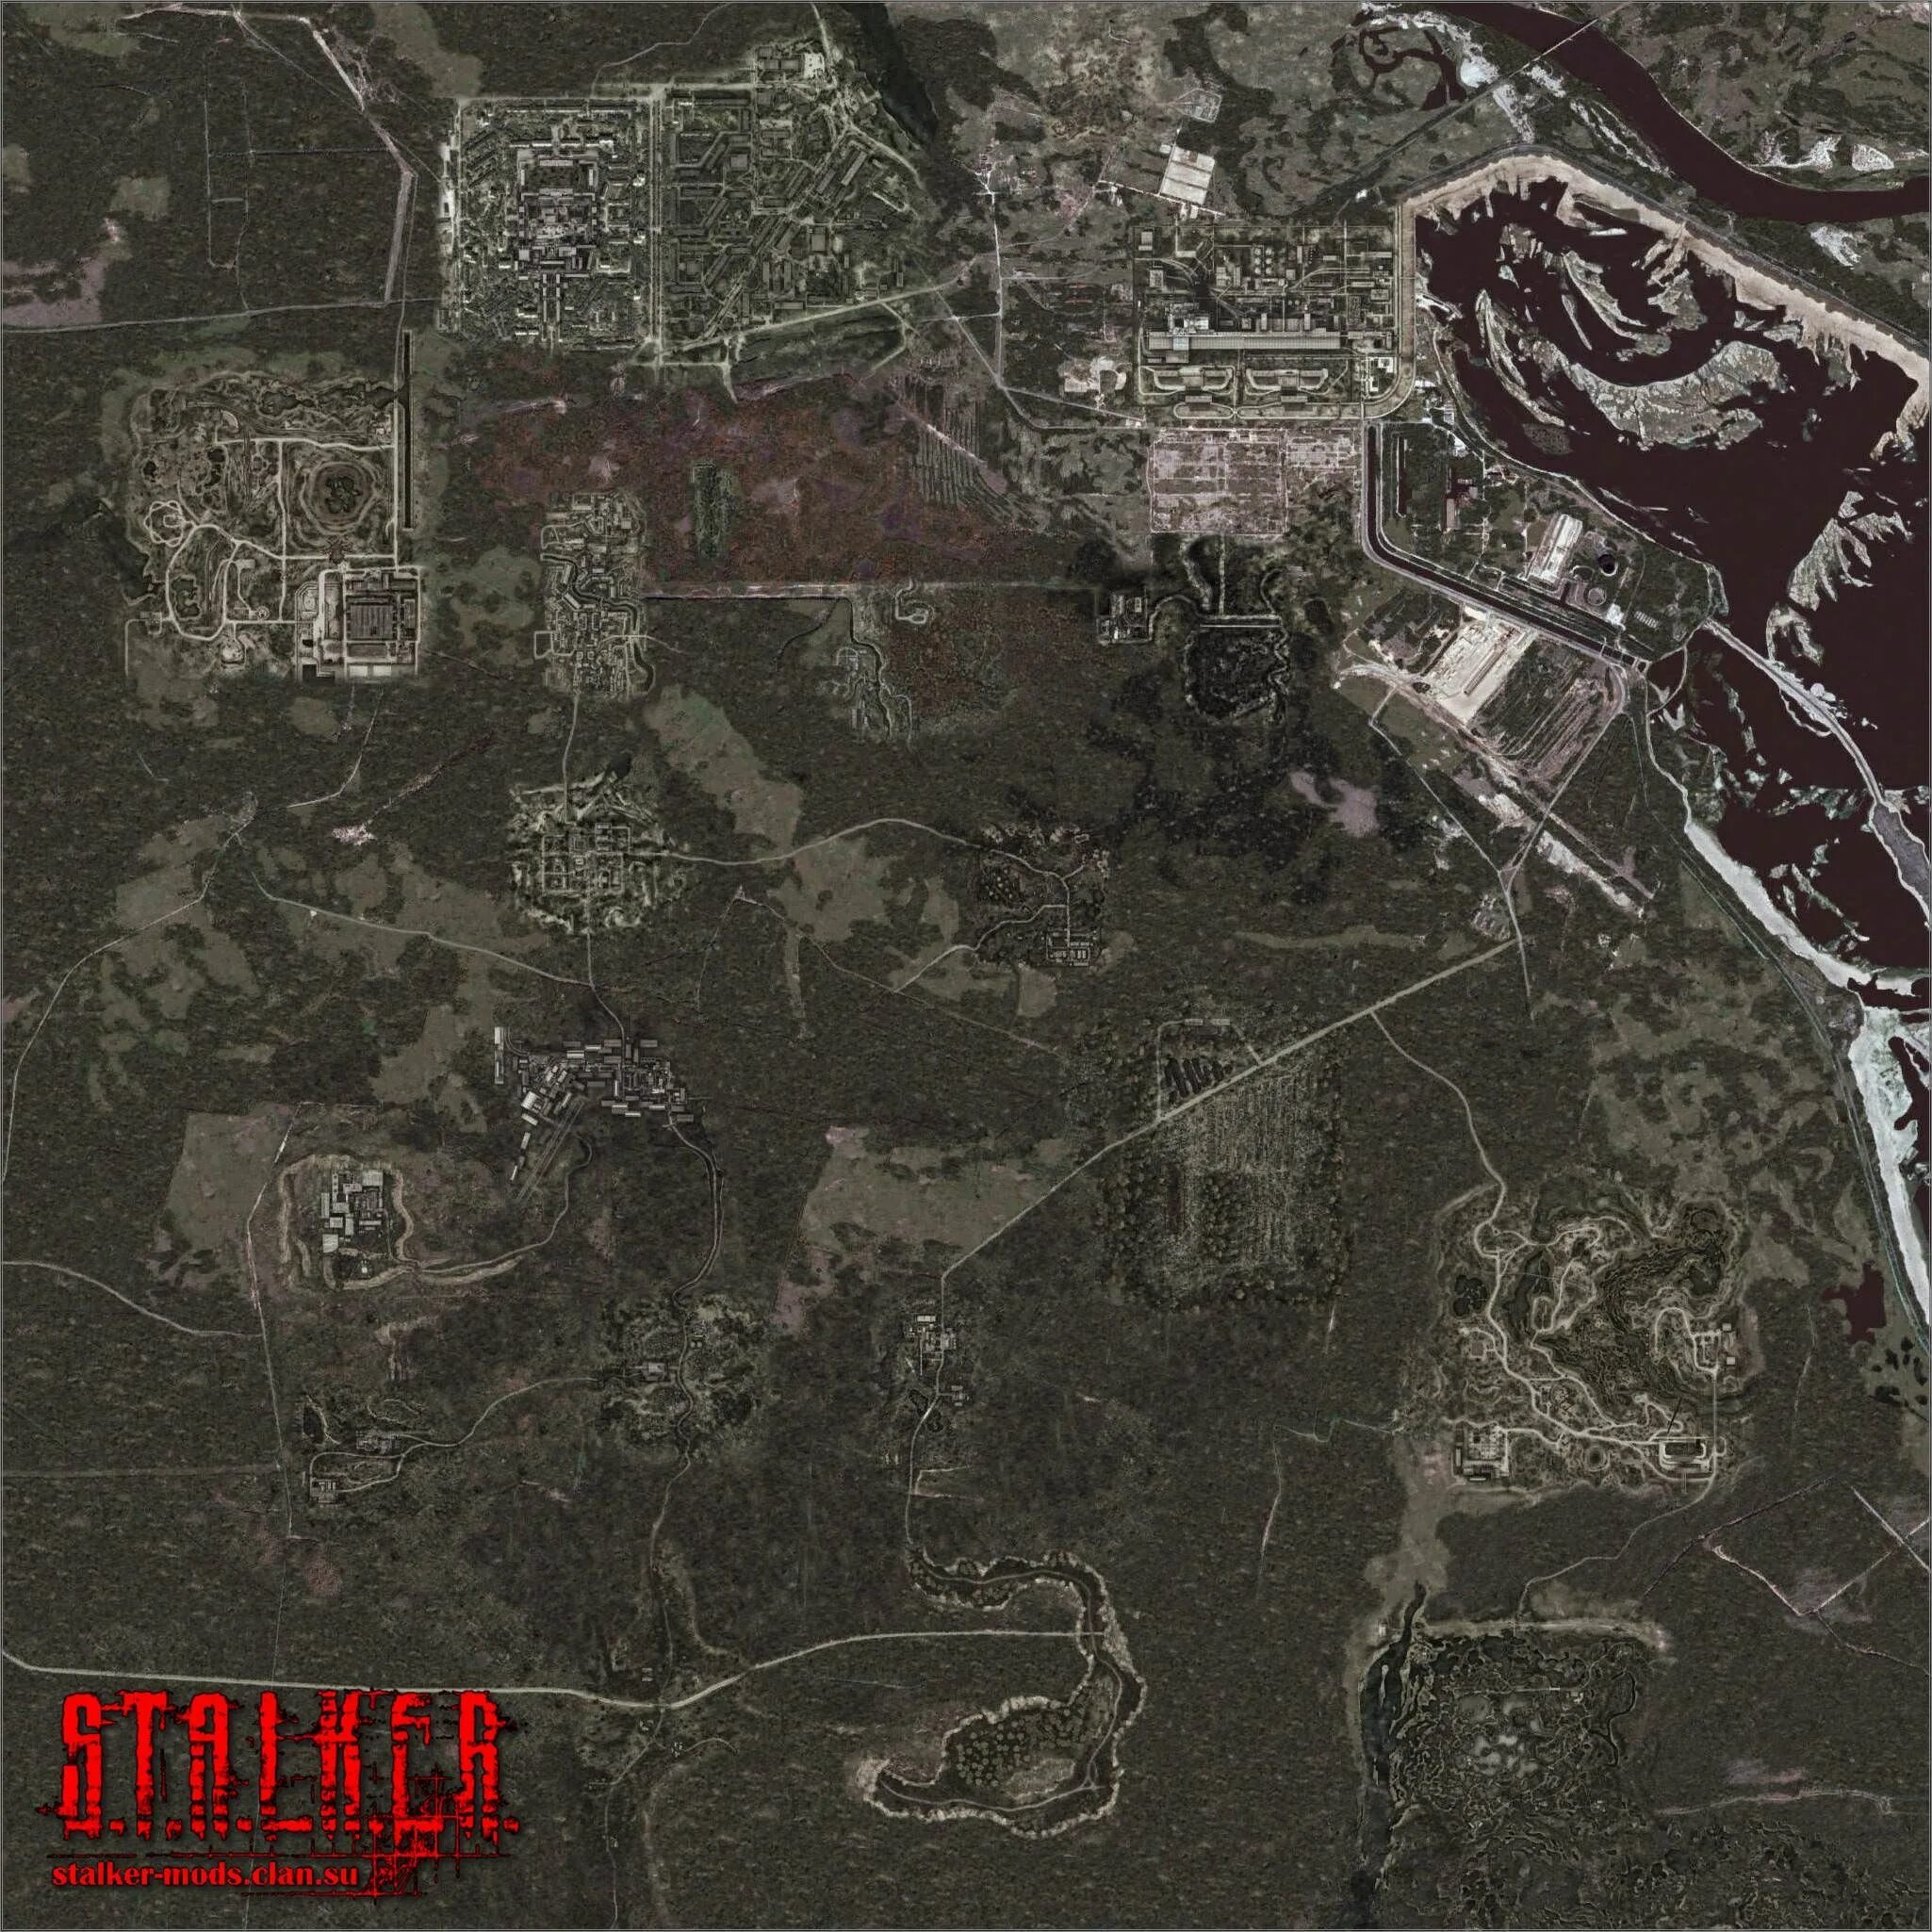 Карта зоны сталкер. Карта зоны отчуждения сталкер. Карта Чернобыль зон сталкер. Карта всей зоны сталкер.